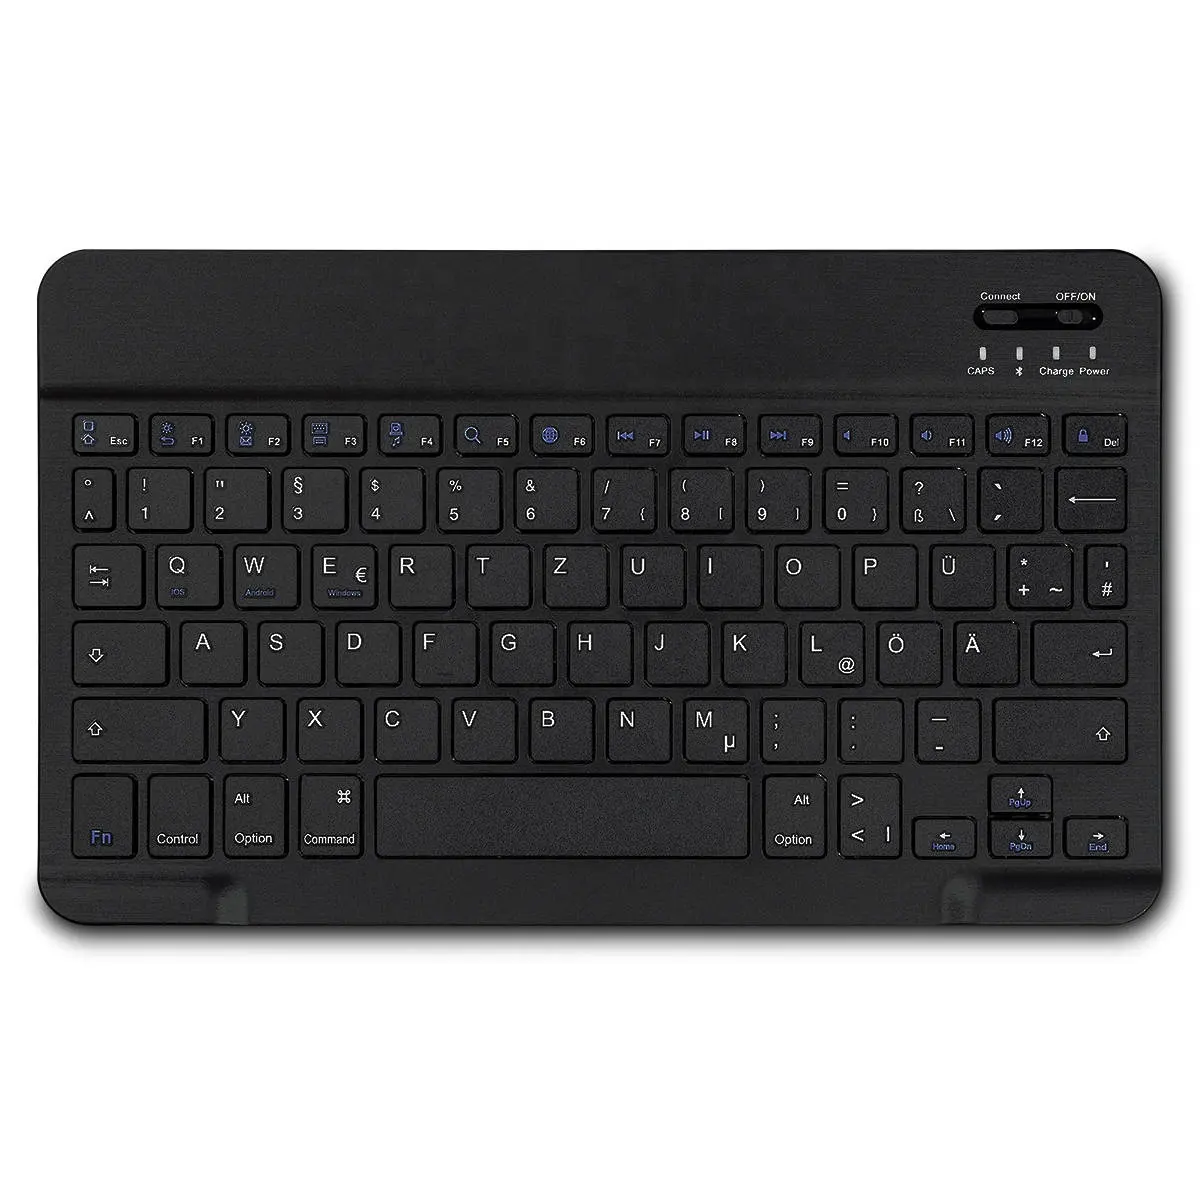 custom keyboard german layout DE language Tastatur slim wireless deutschsprachig keyboard for MAC xiaomi mobiles and ipad Iphone